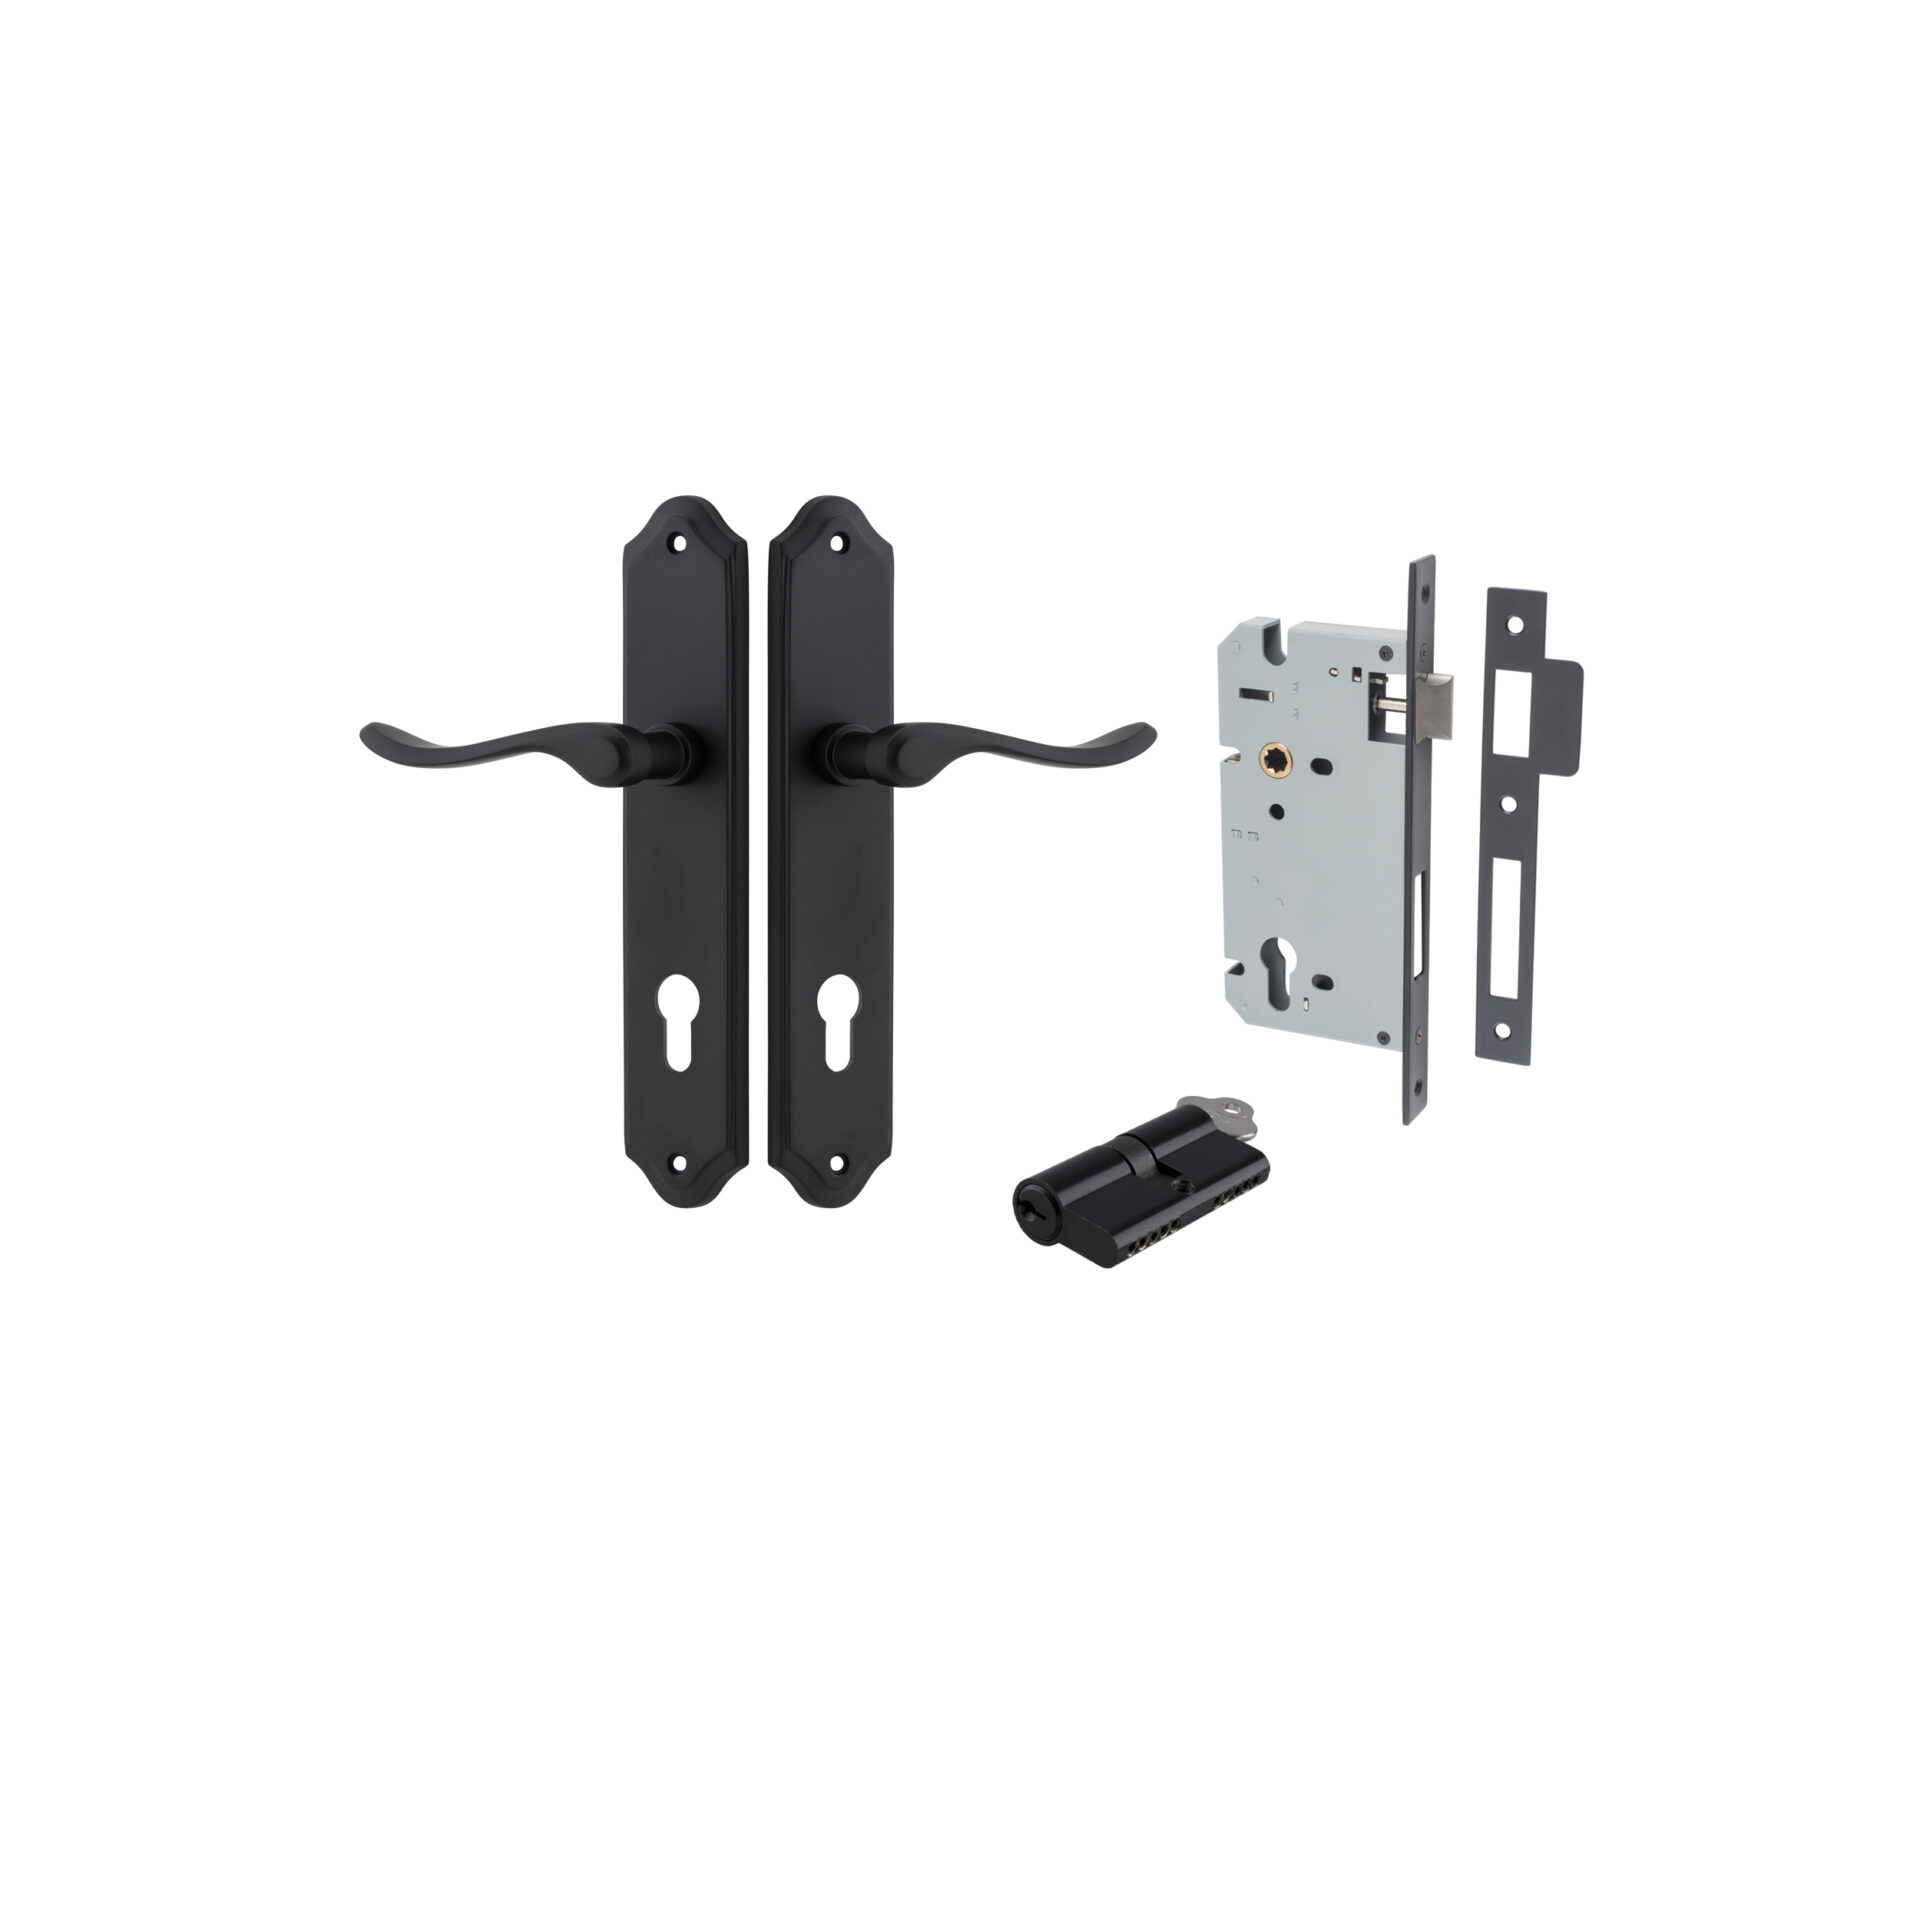 Stirling Lever - Shouldered Backplate Entrance Kit with High Security Lock